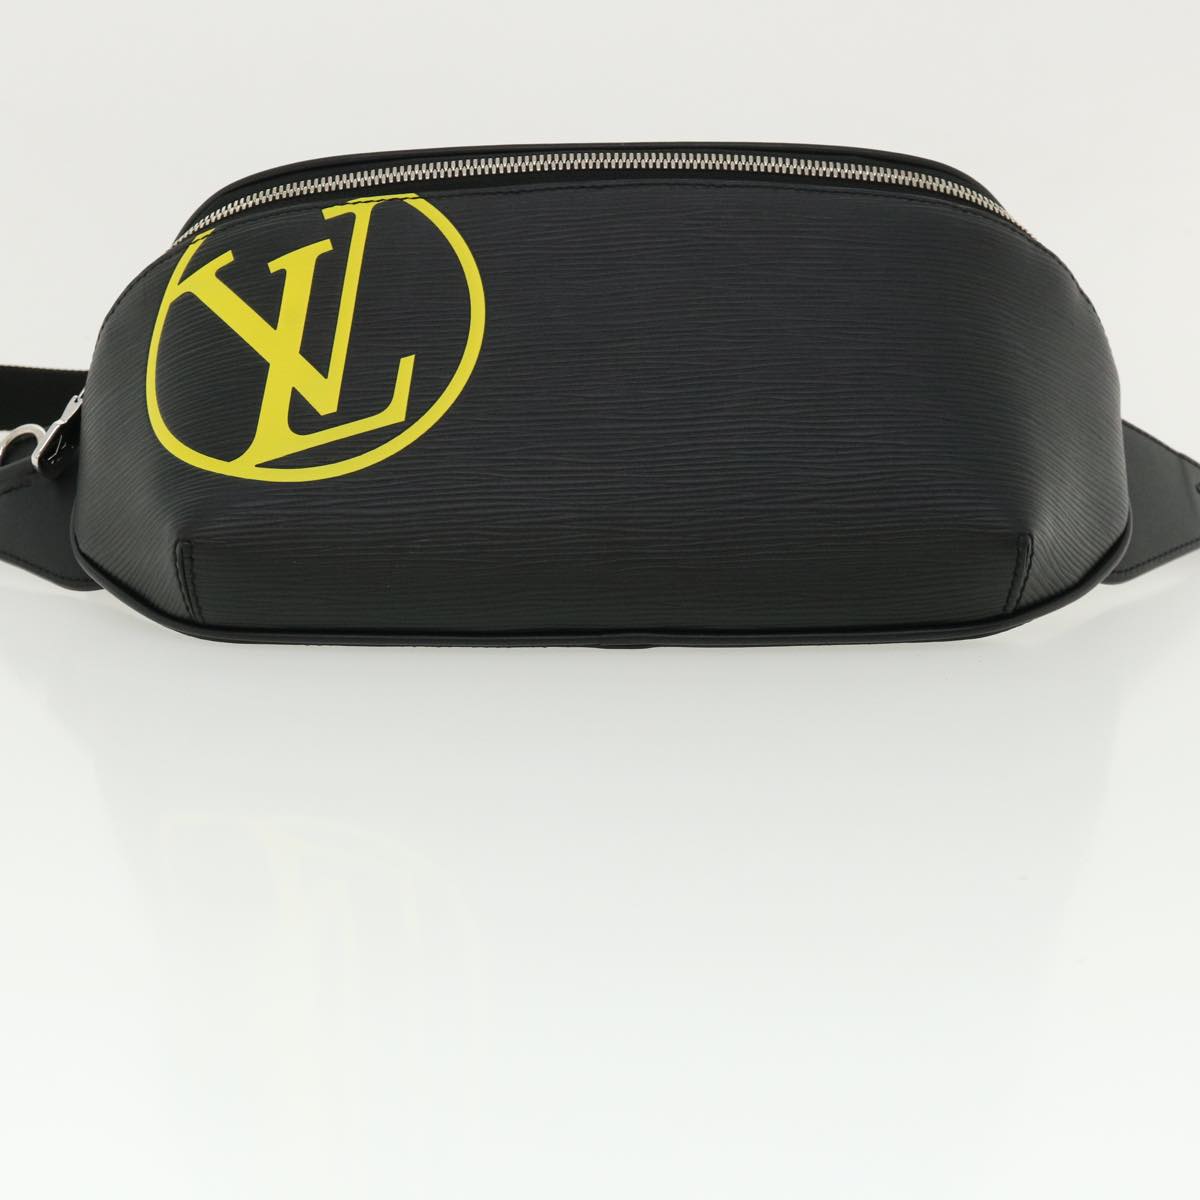 LOUIS VUITTON Epi LV Circle Bum Bag Waist Bag Black Yellow M55131 LV Auth ar8522